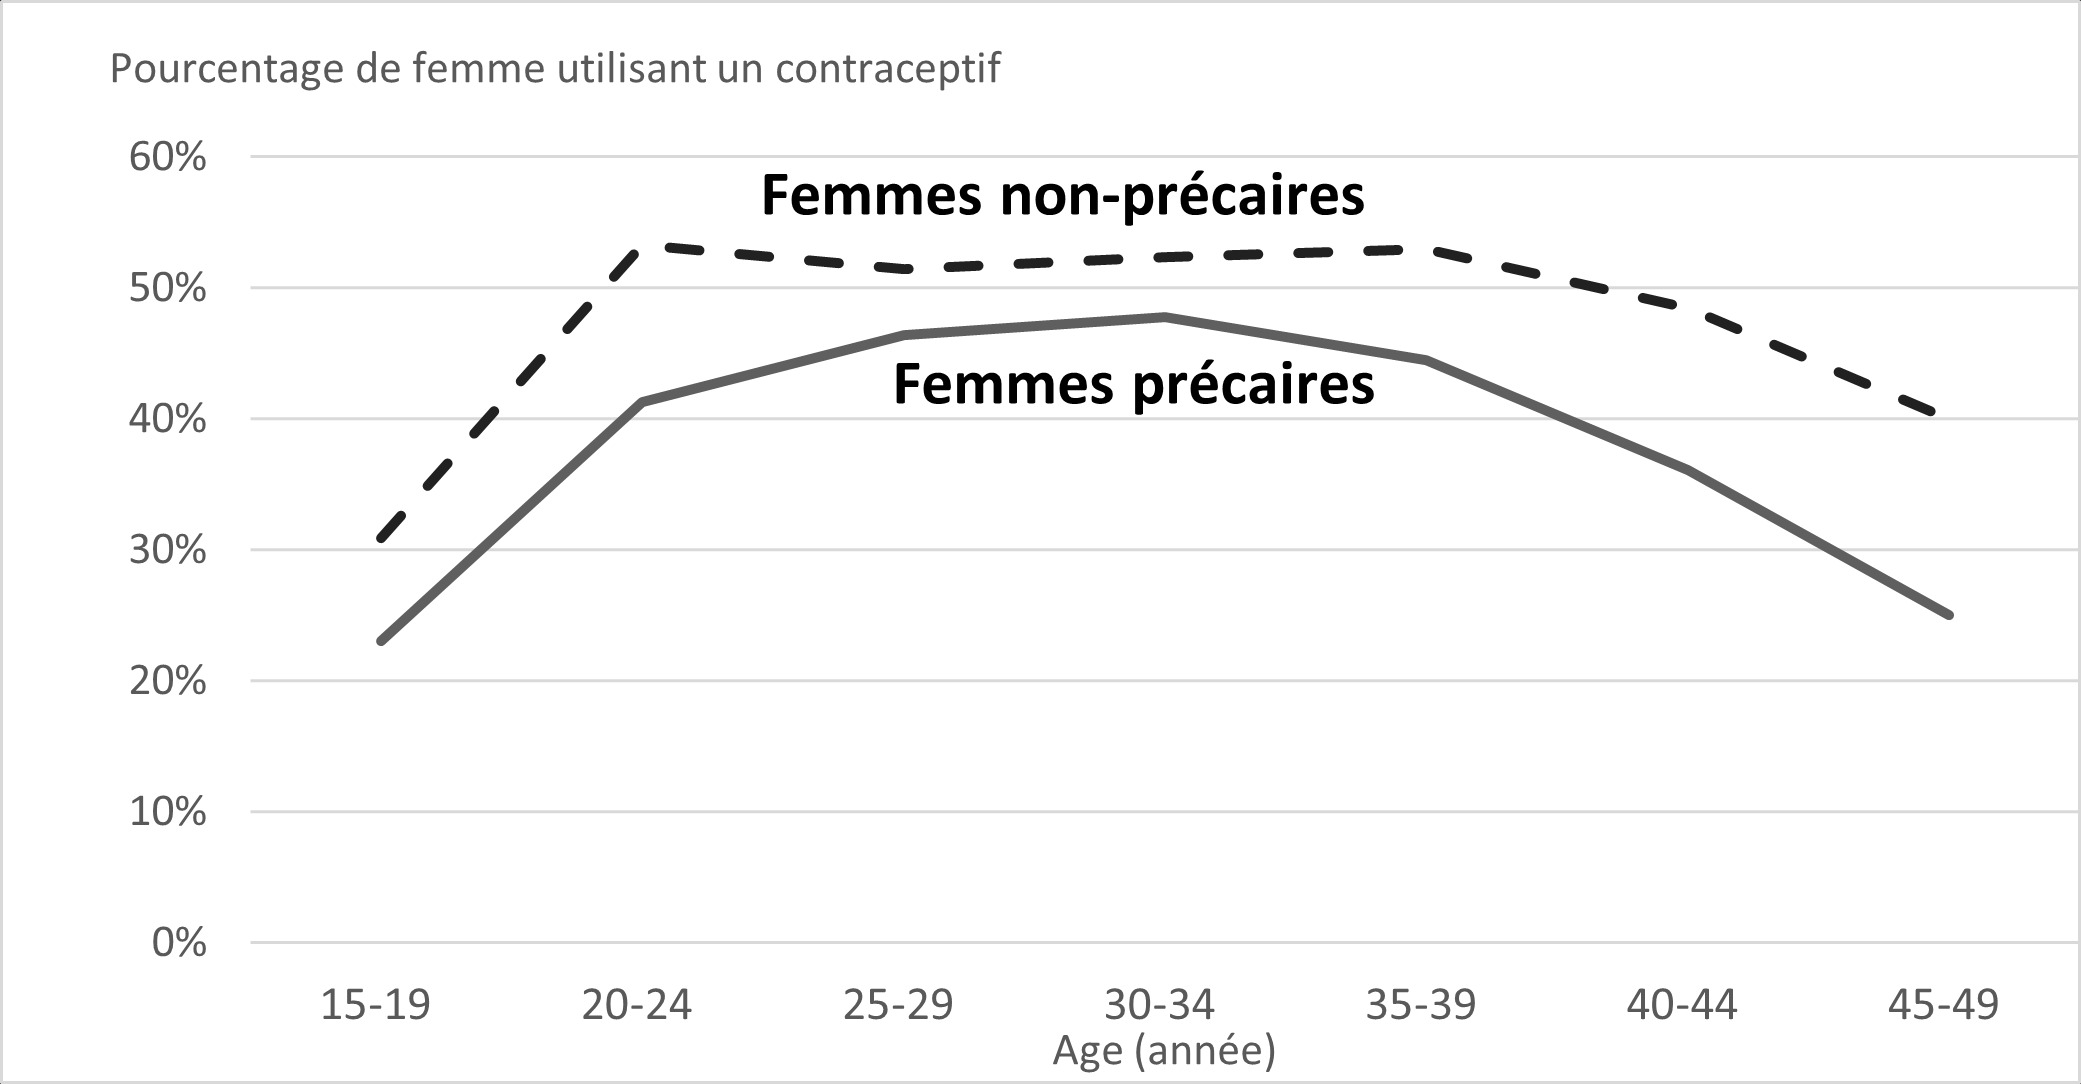   Use of contraceptives reimbursed by precarious women and non-precarious women